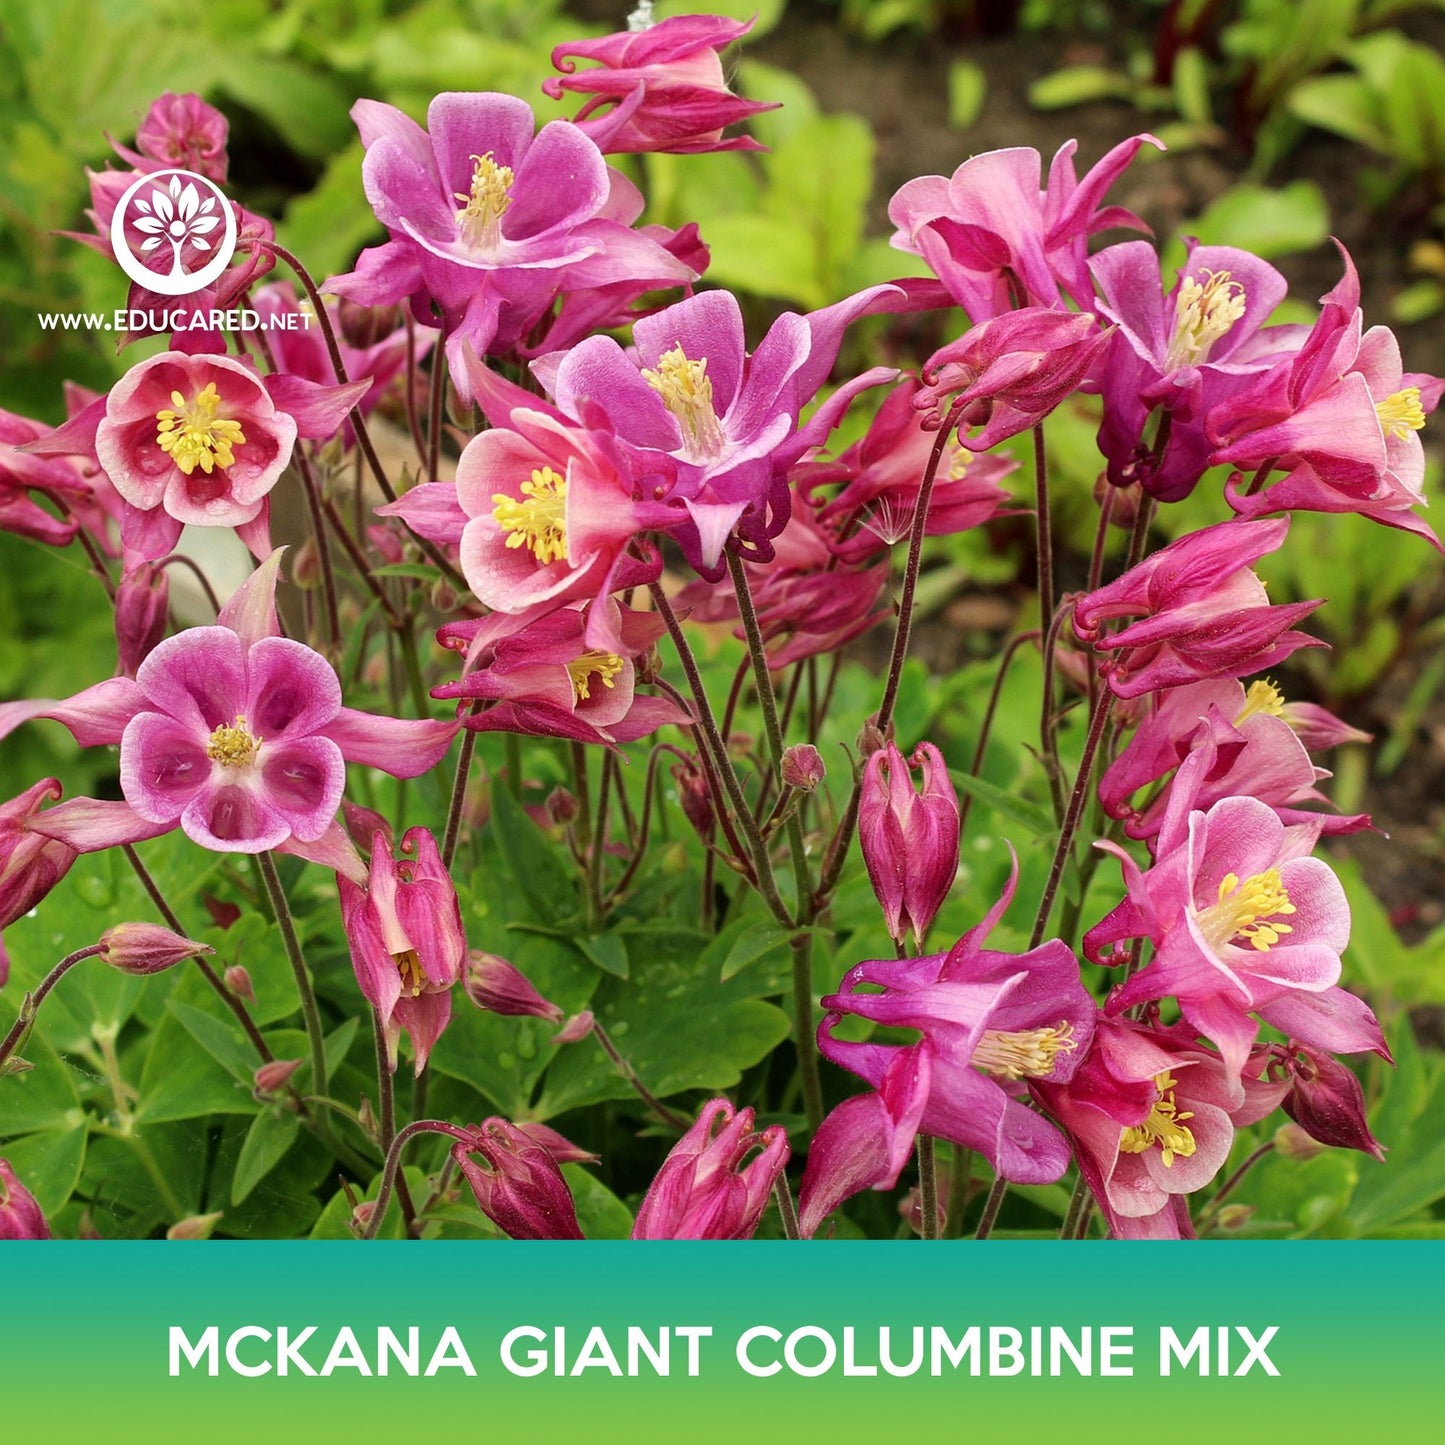 Mckana Giant Columbine Mix Seeds, Aquilegia hybrida